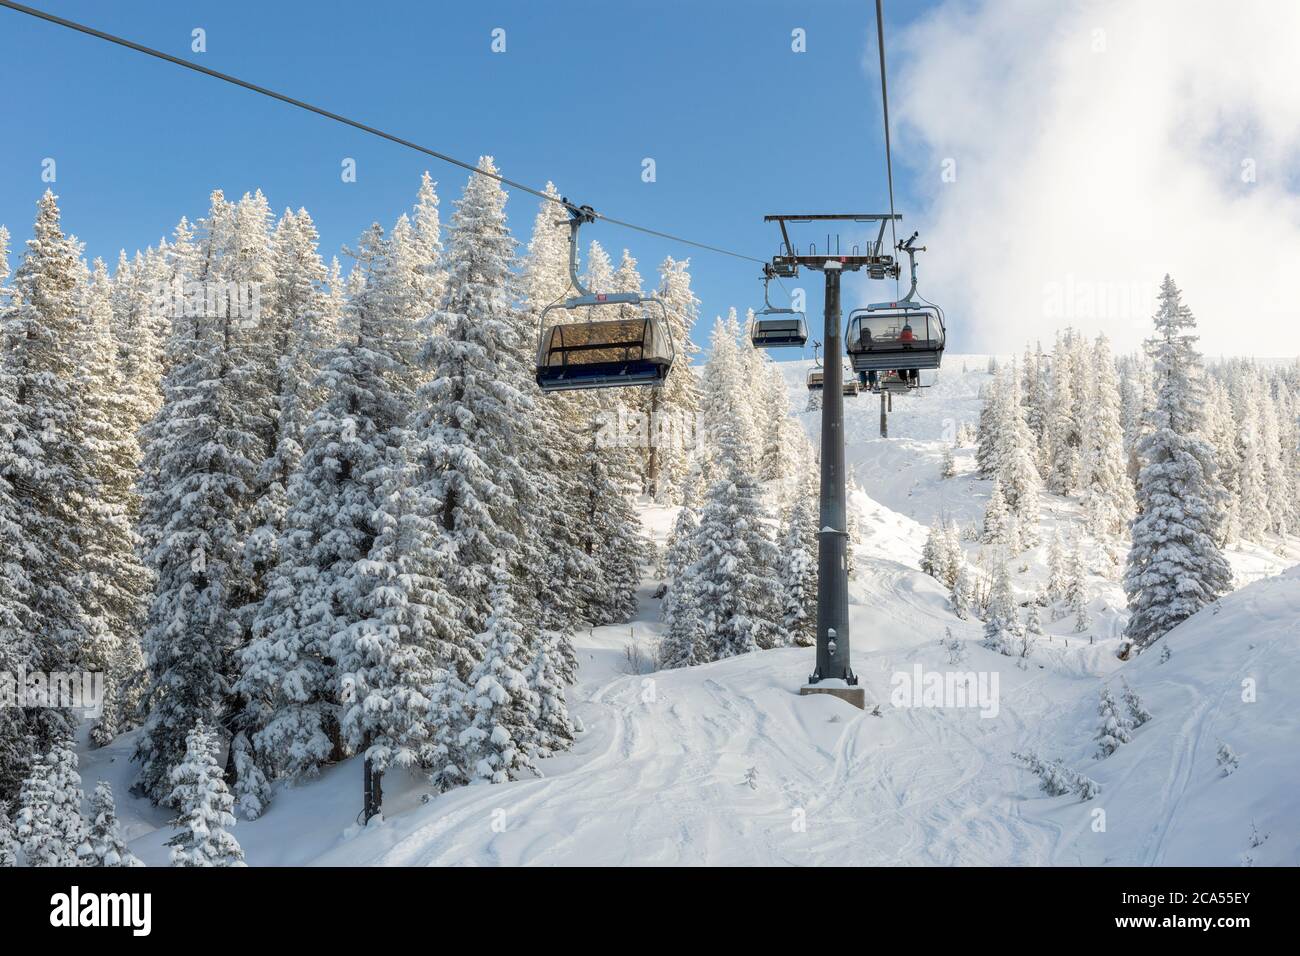 Chairlift and snowy trees at Kitzbuhel Ski Resort in Austria. Stock Photo